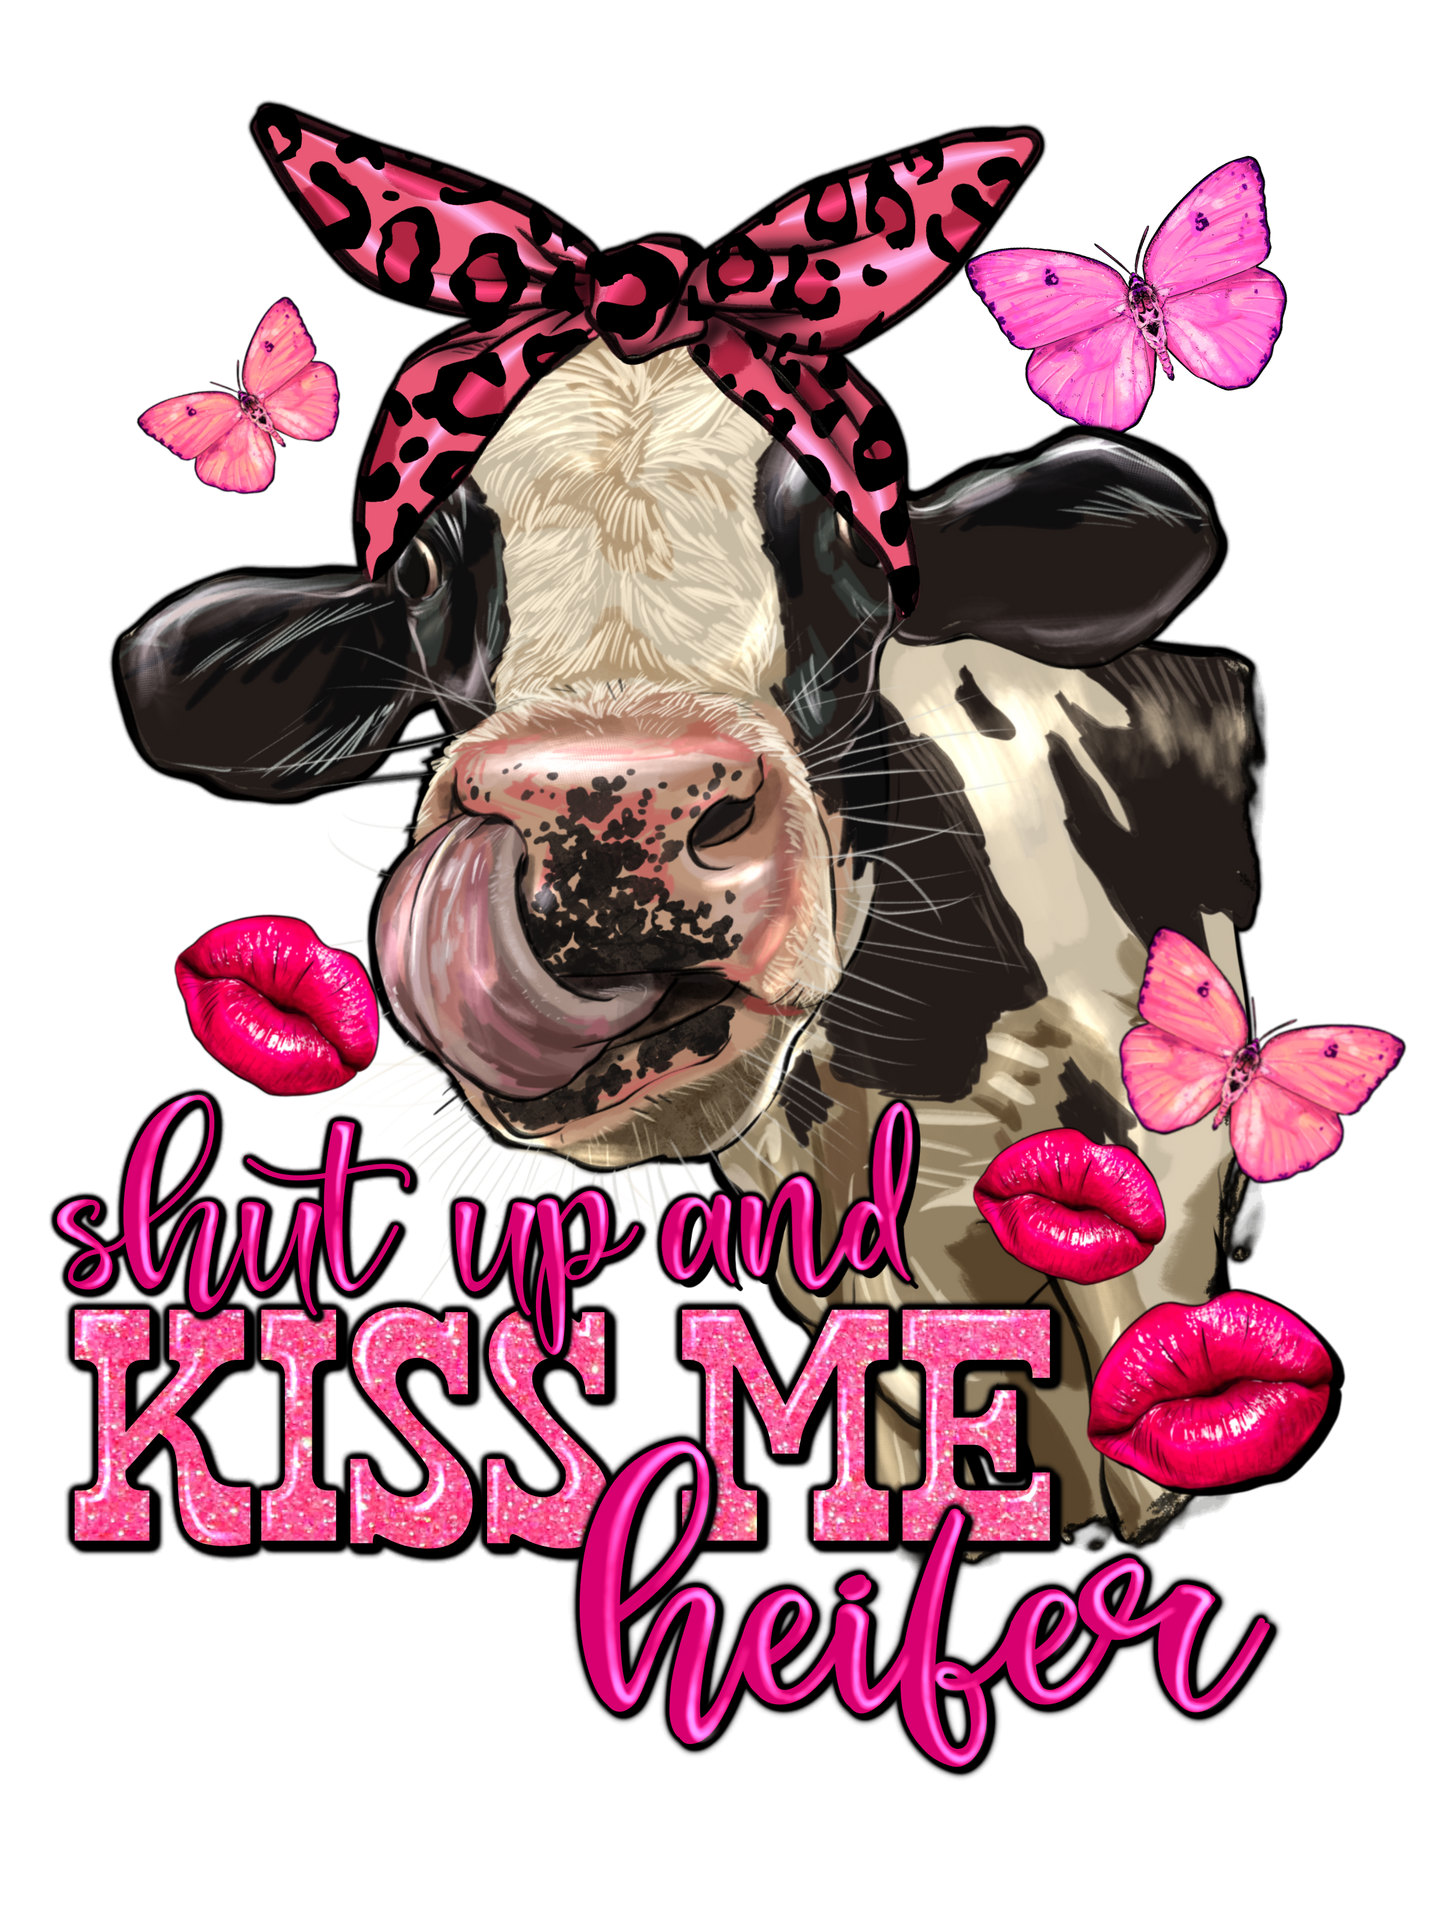 Shut up and kiss me heifer